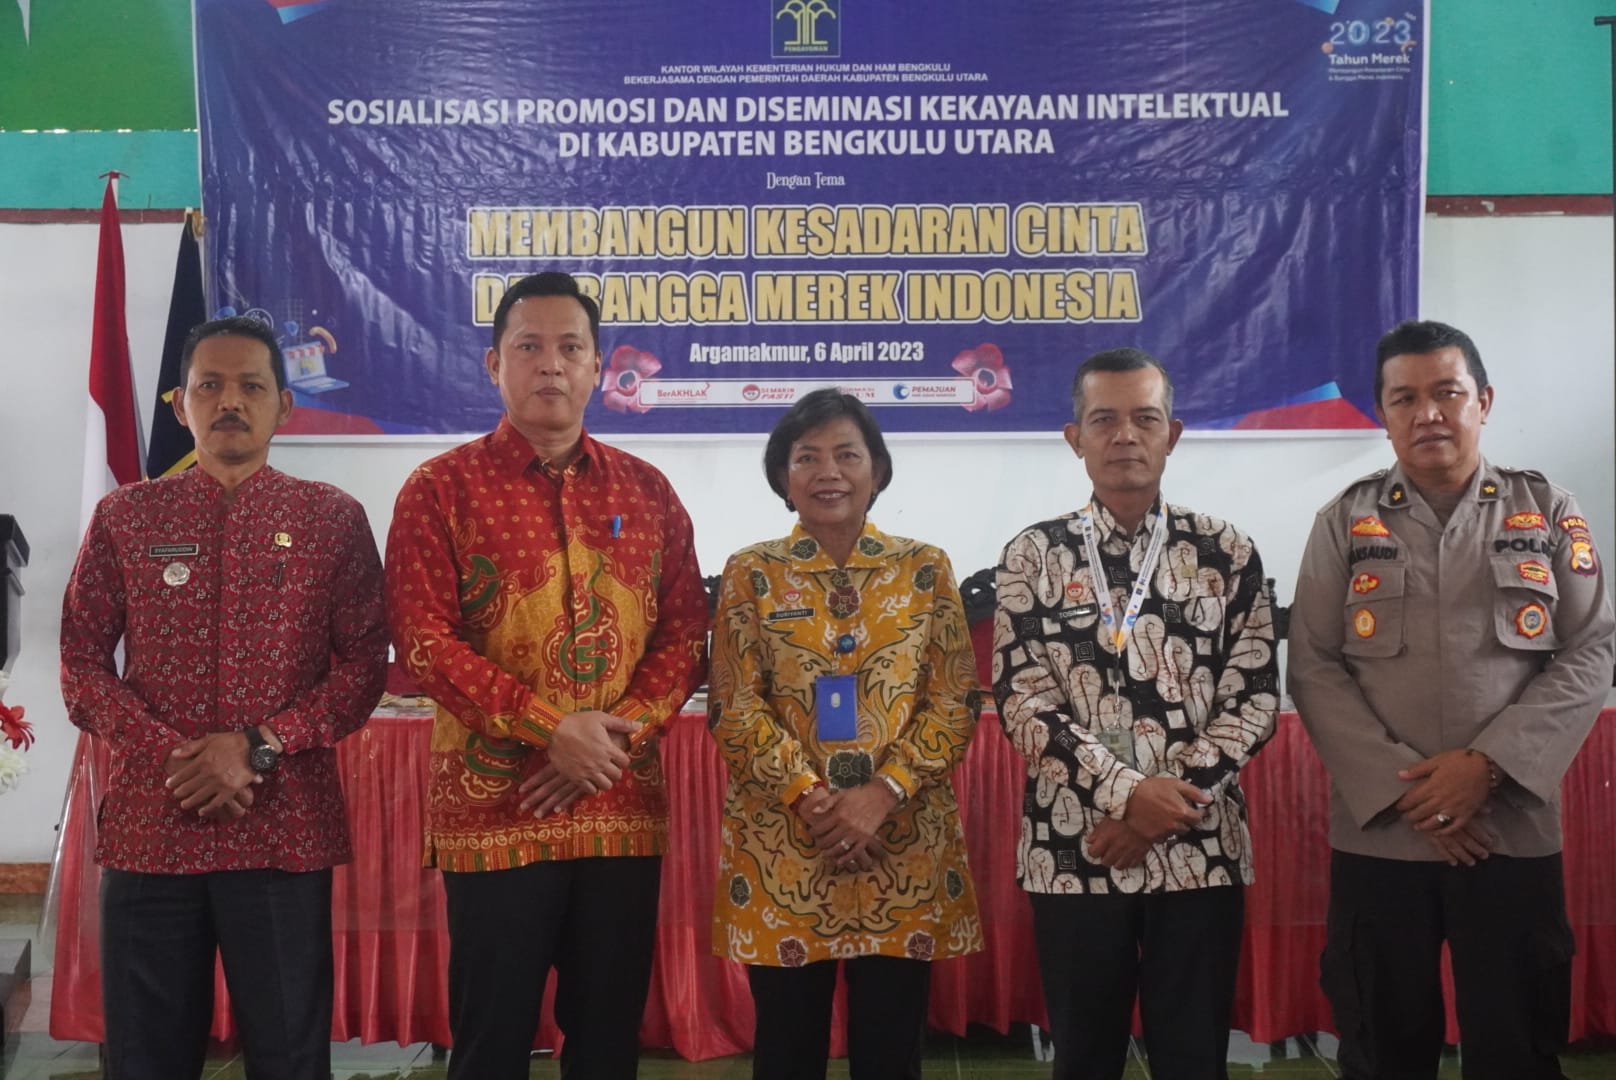 Kemenkumham Bengkulu Berikan Sosialisasi Kekayaan Intelektual Bagi UMKM di Bengkulu Utara, Ini Manfaatnya 